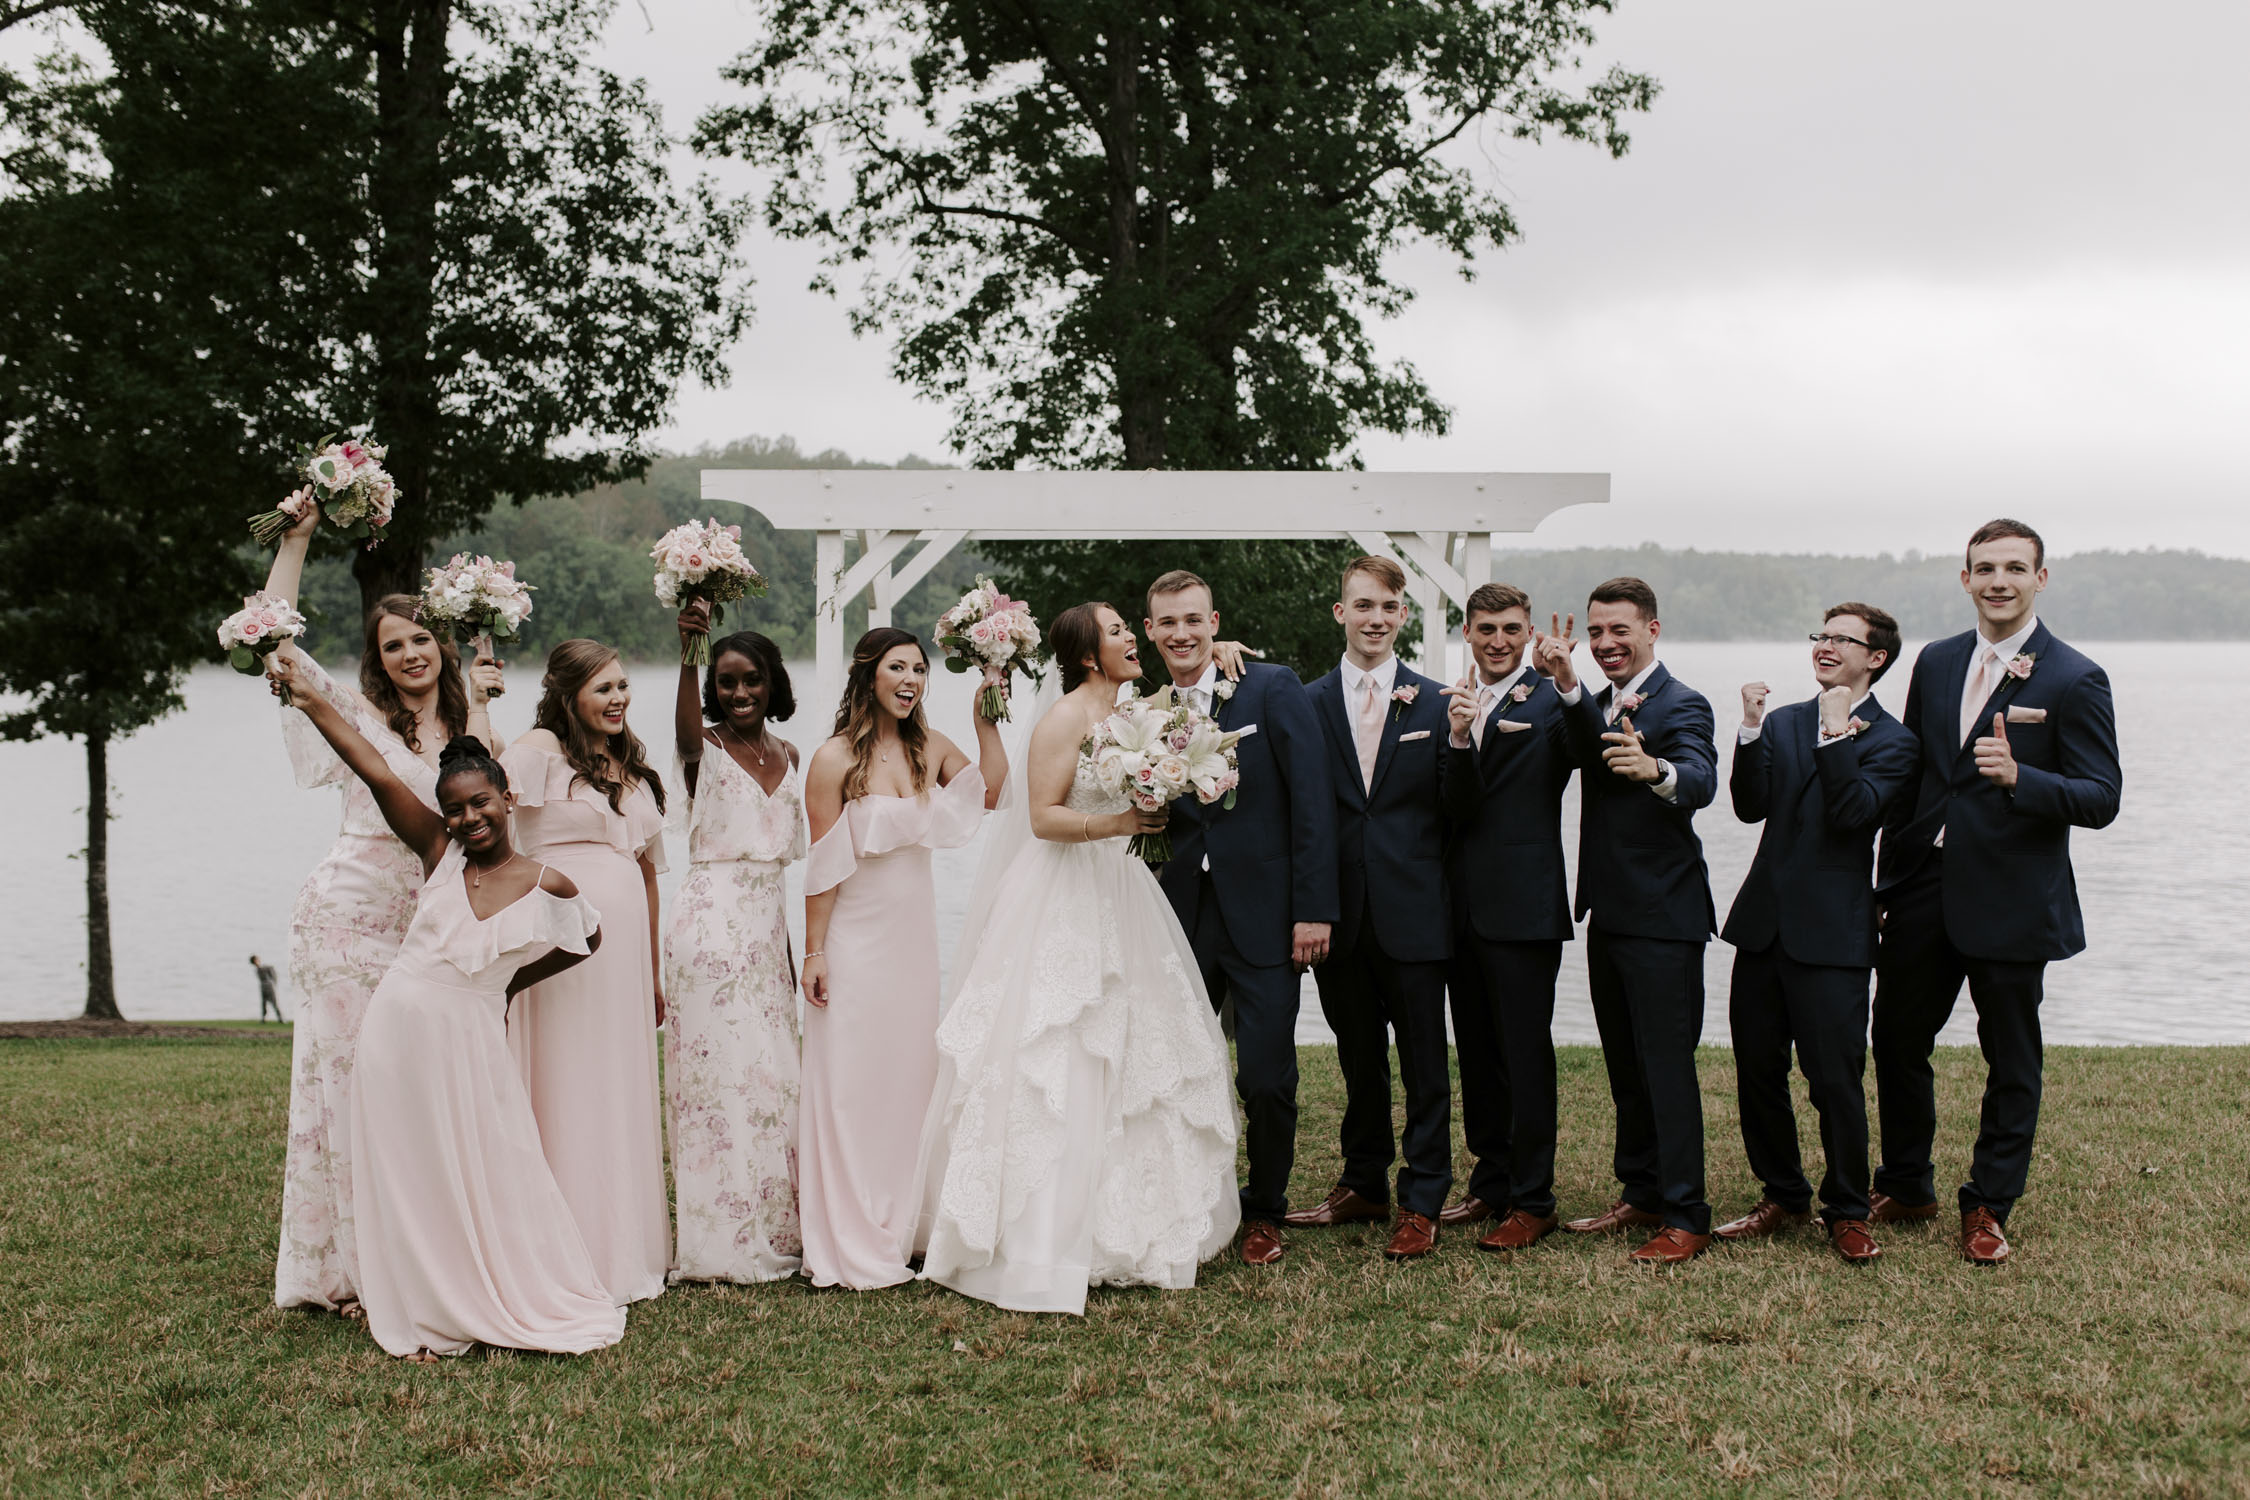 Rainy Bella Collina Wedding - Full Wedding Party Portraits| Kayli LaFon Photography, Greensboro Winston-Salem NC Wedding Photographer